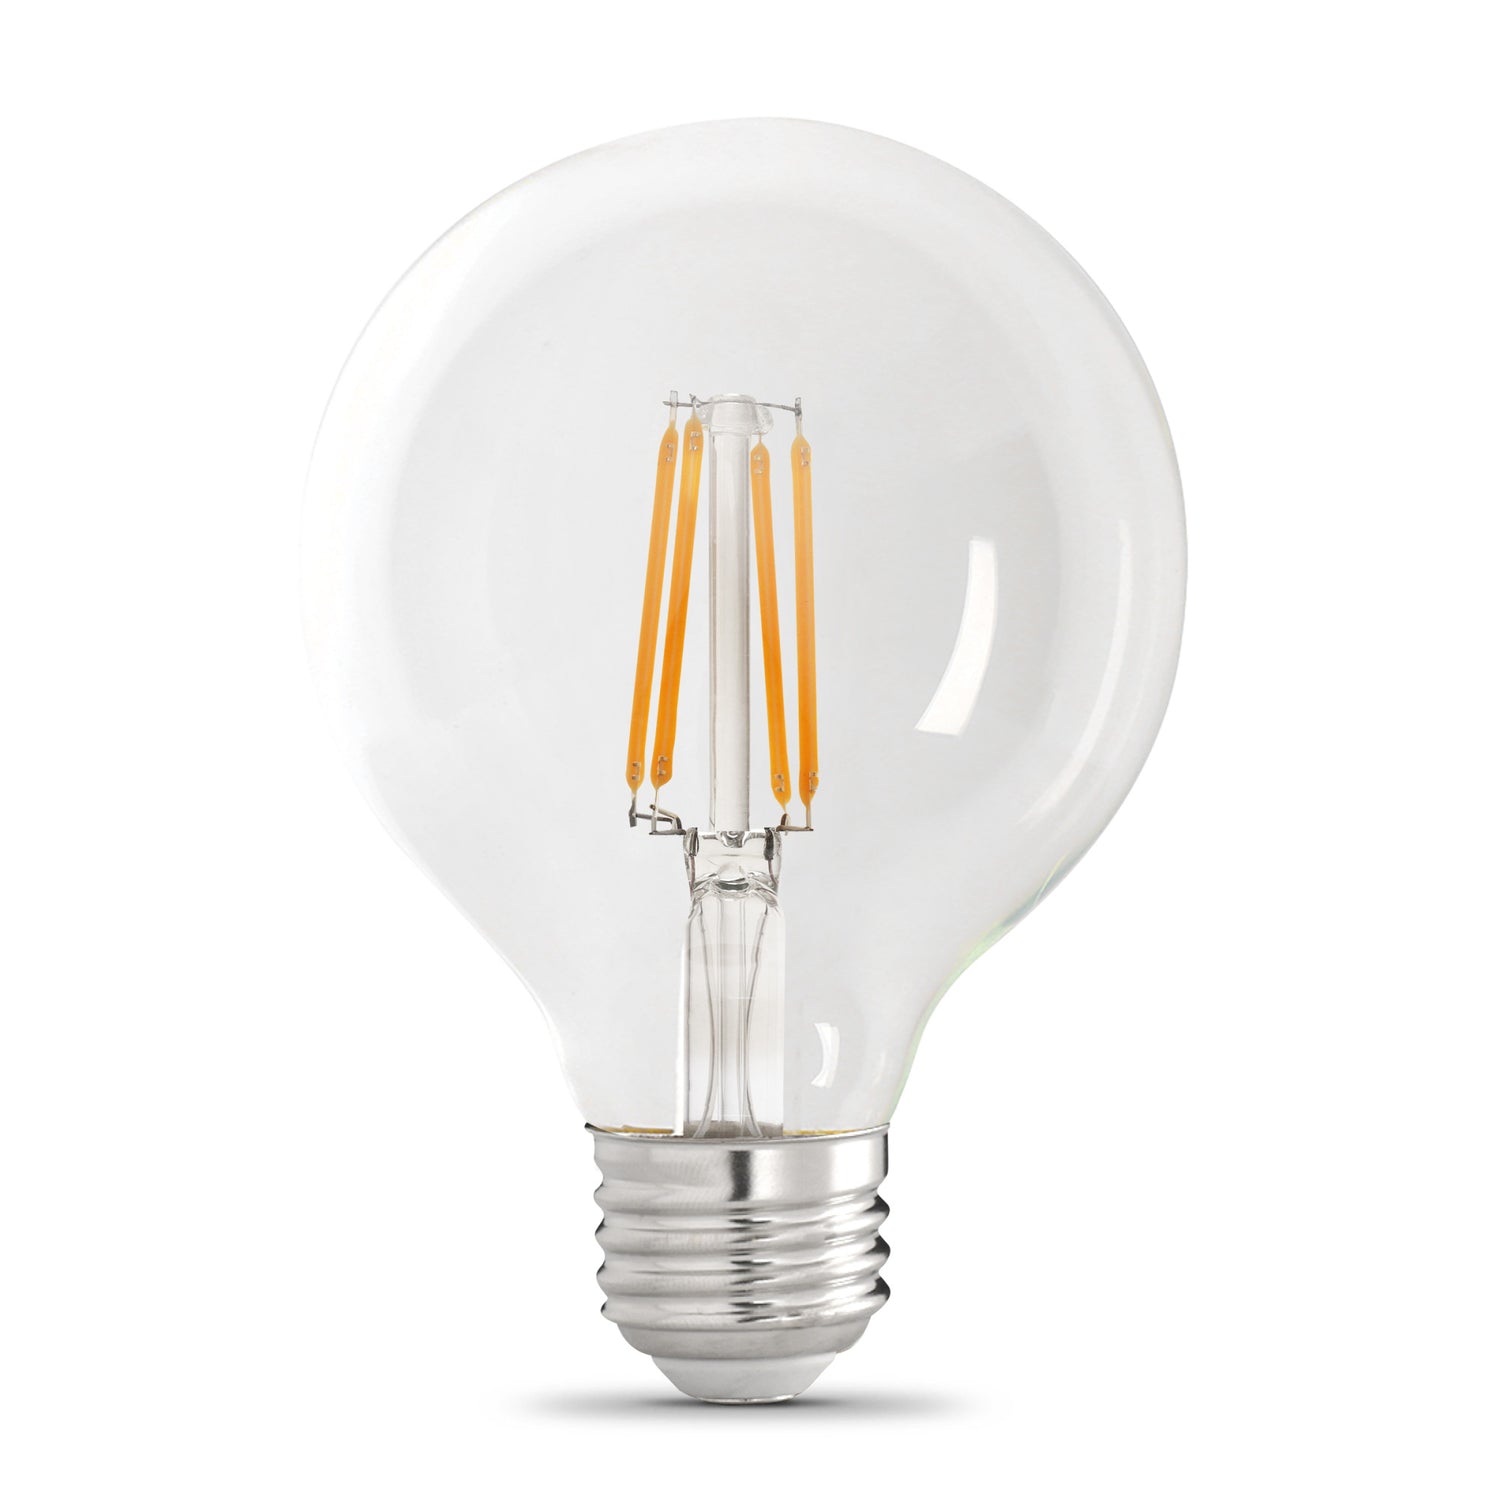 12W (100W Replacement) Bright White (3000K) E26 Base G25 Filament LED Light Bulb (3-Pack)